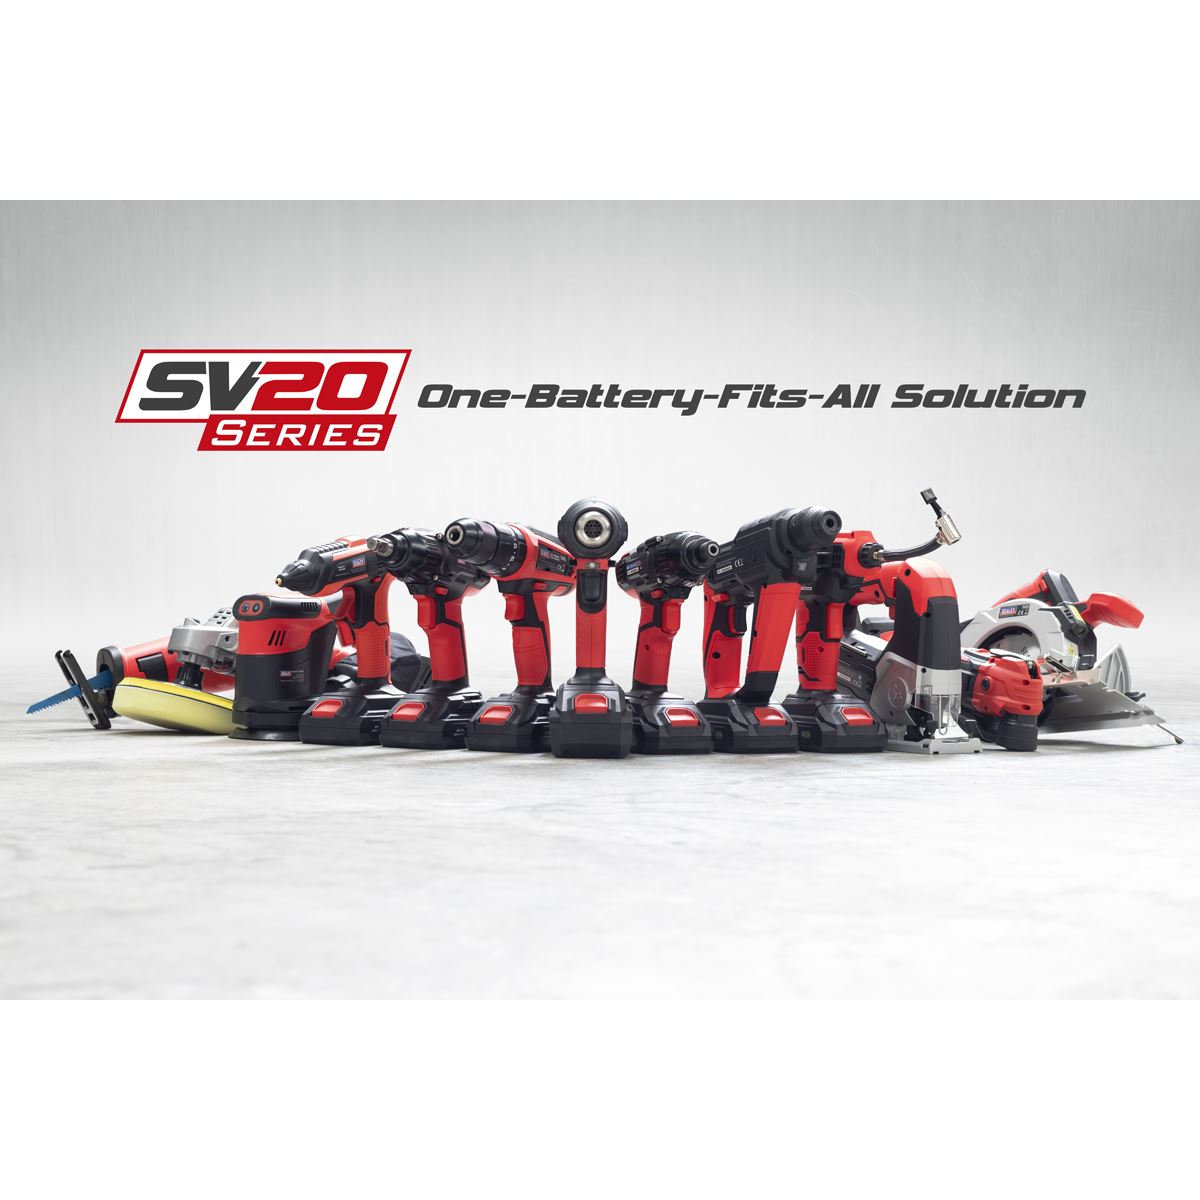 Sealey Cordless Chainsaw 25cm 20V 4Ah SV20 Series Kit -  2 Batteries